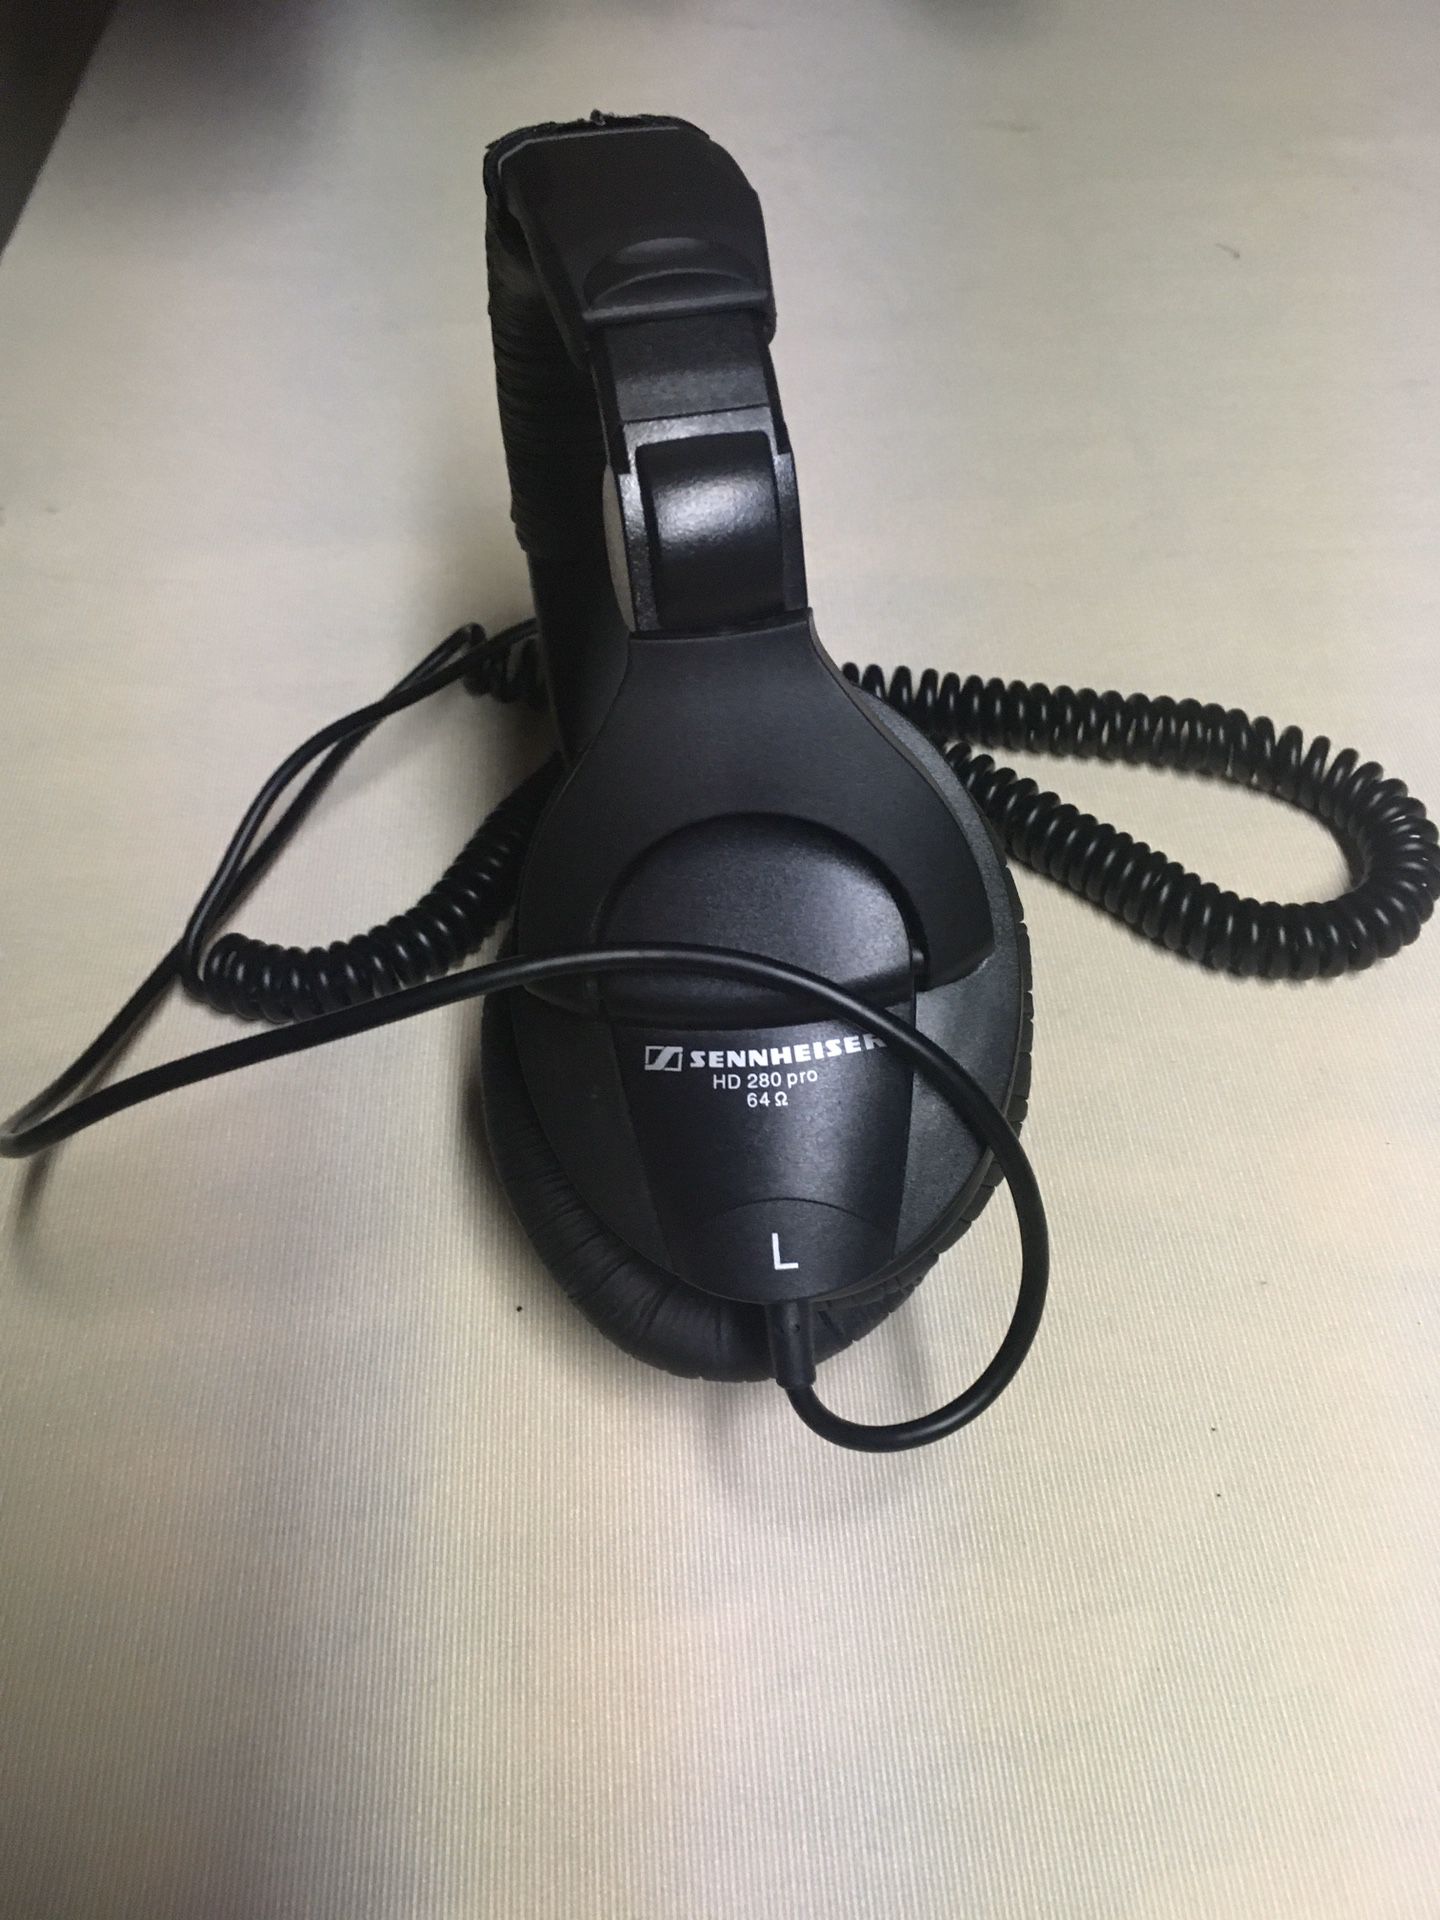 Headphones sennheiser. Hd. 280 pro 64. Cable 10 foot. Price 120 dollars